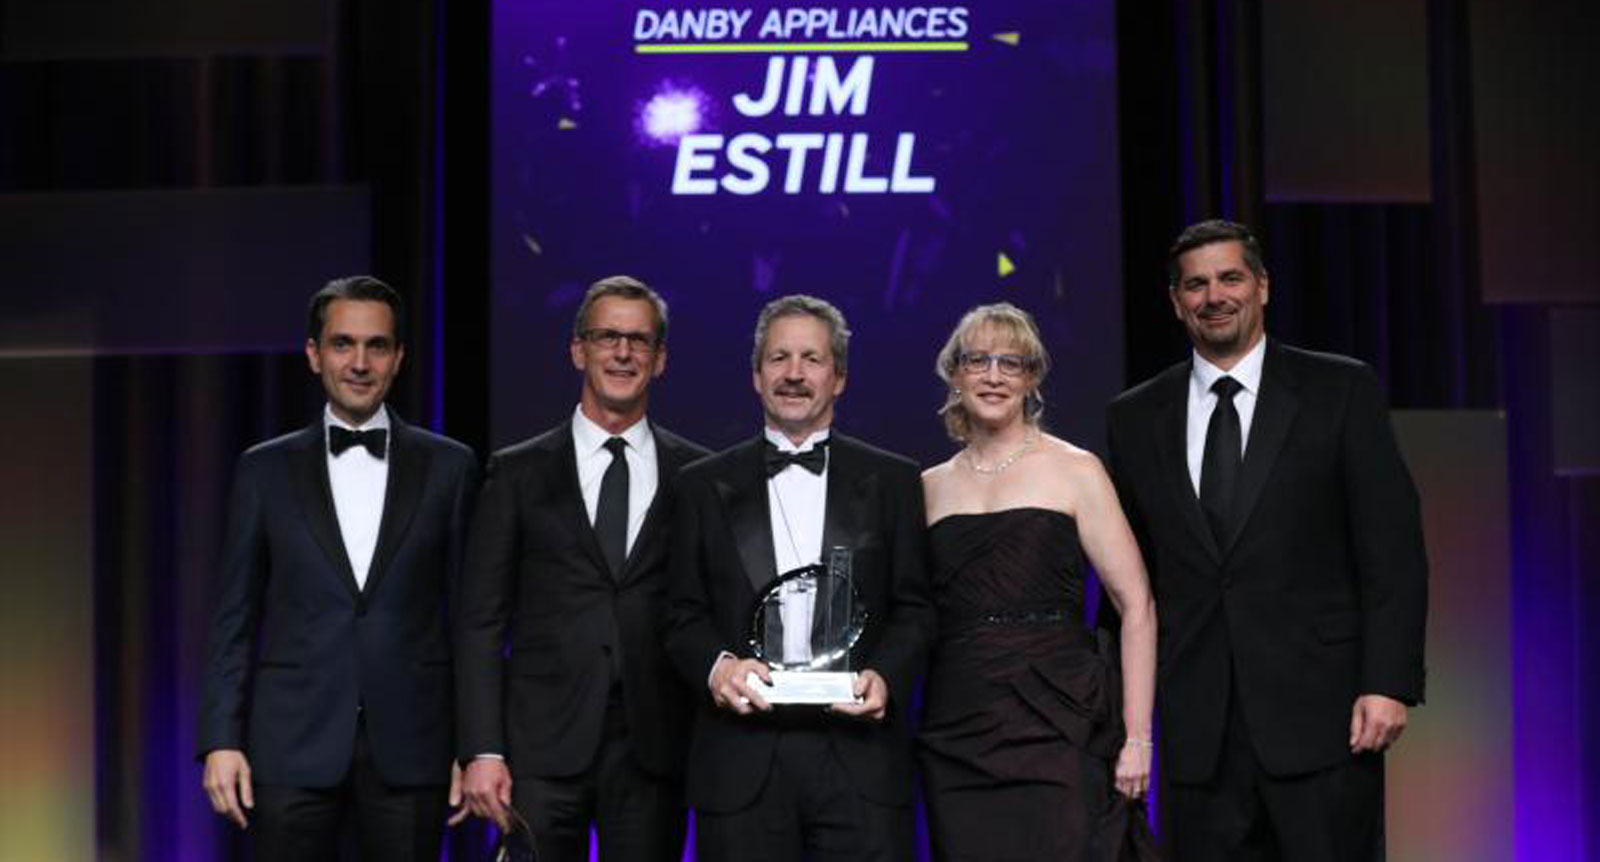 Industry News - Jim Estill of Danby Appliances Named EY Entrepreneur of the Year® 2019 Ontario Award